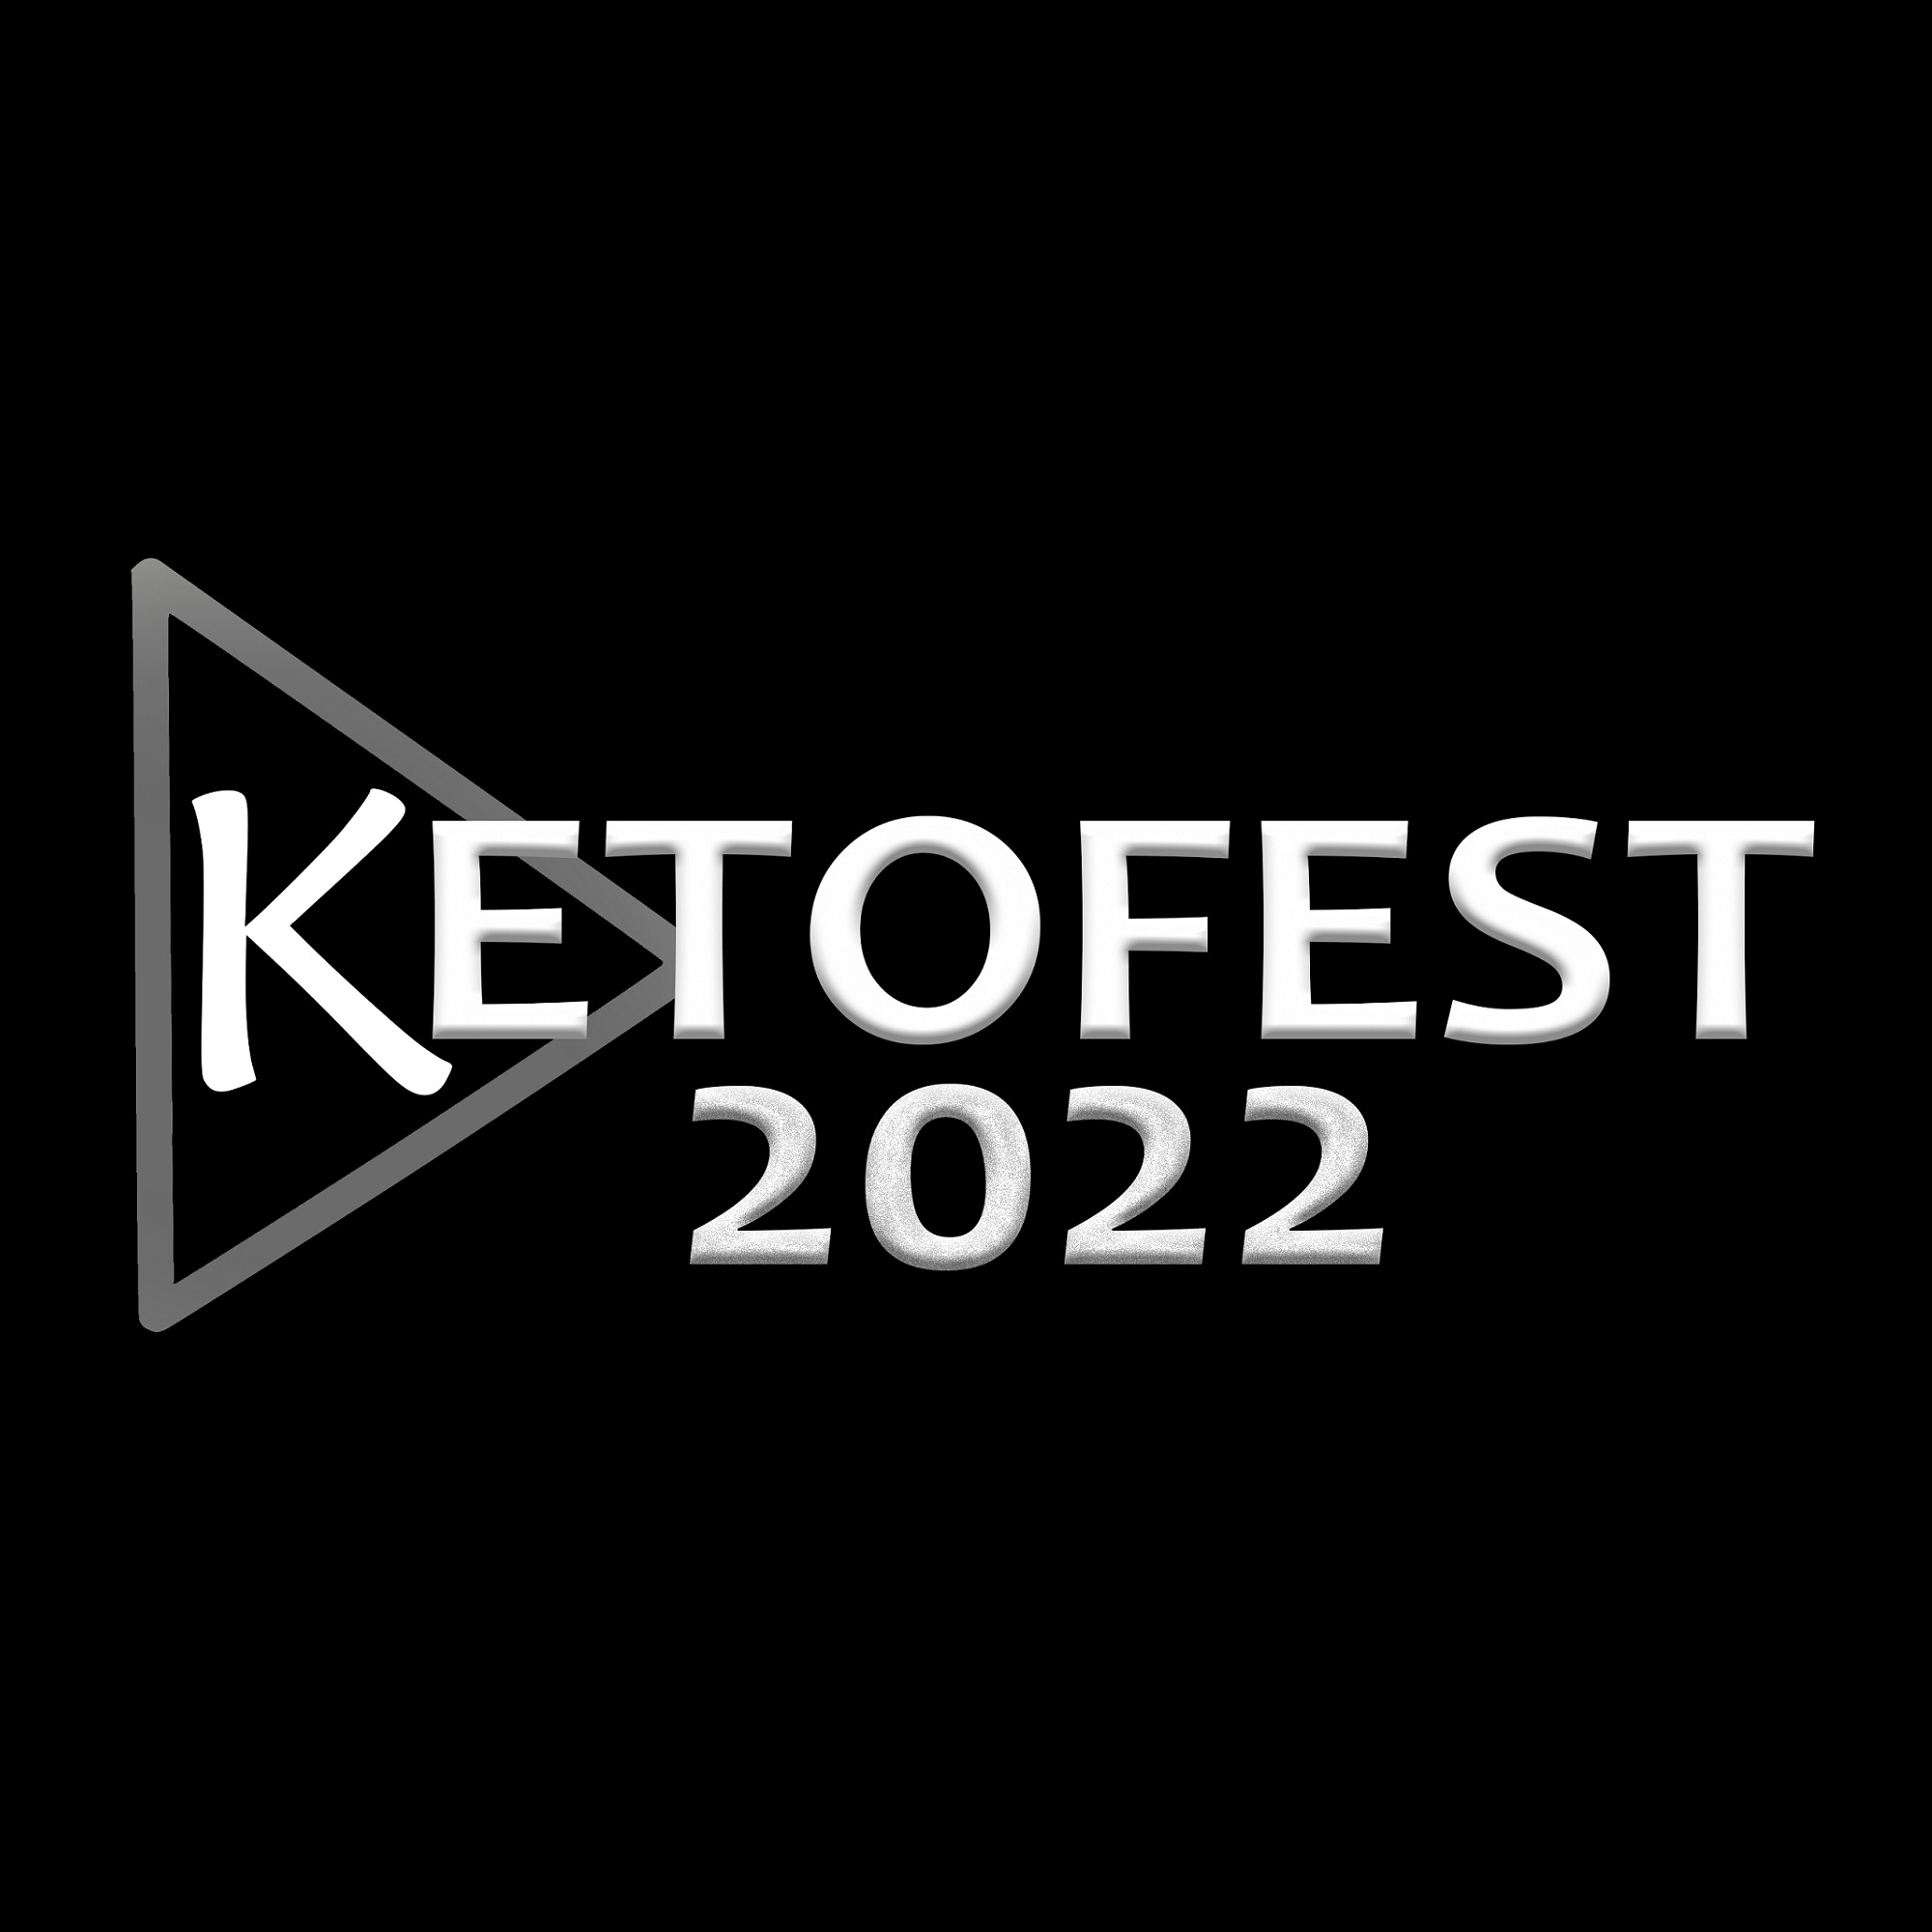 Ketofest 2022 Is On!